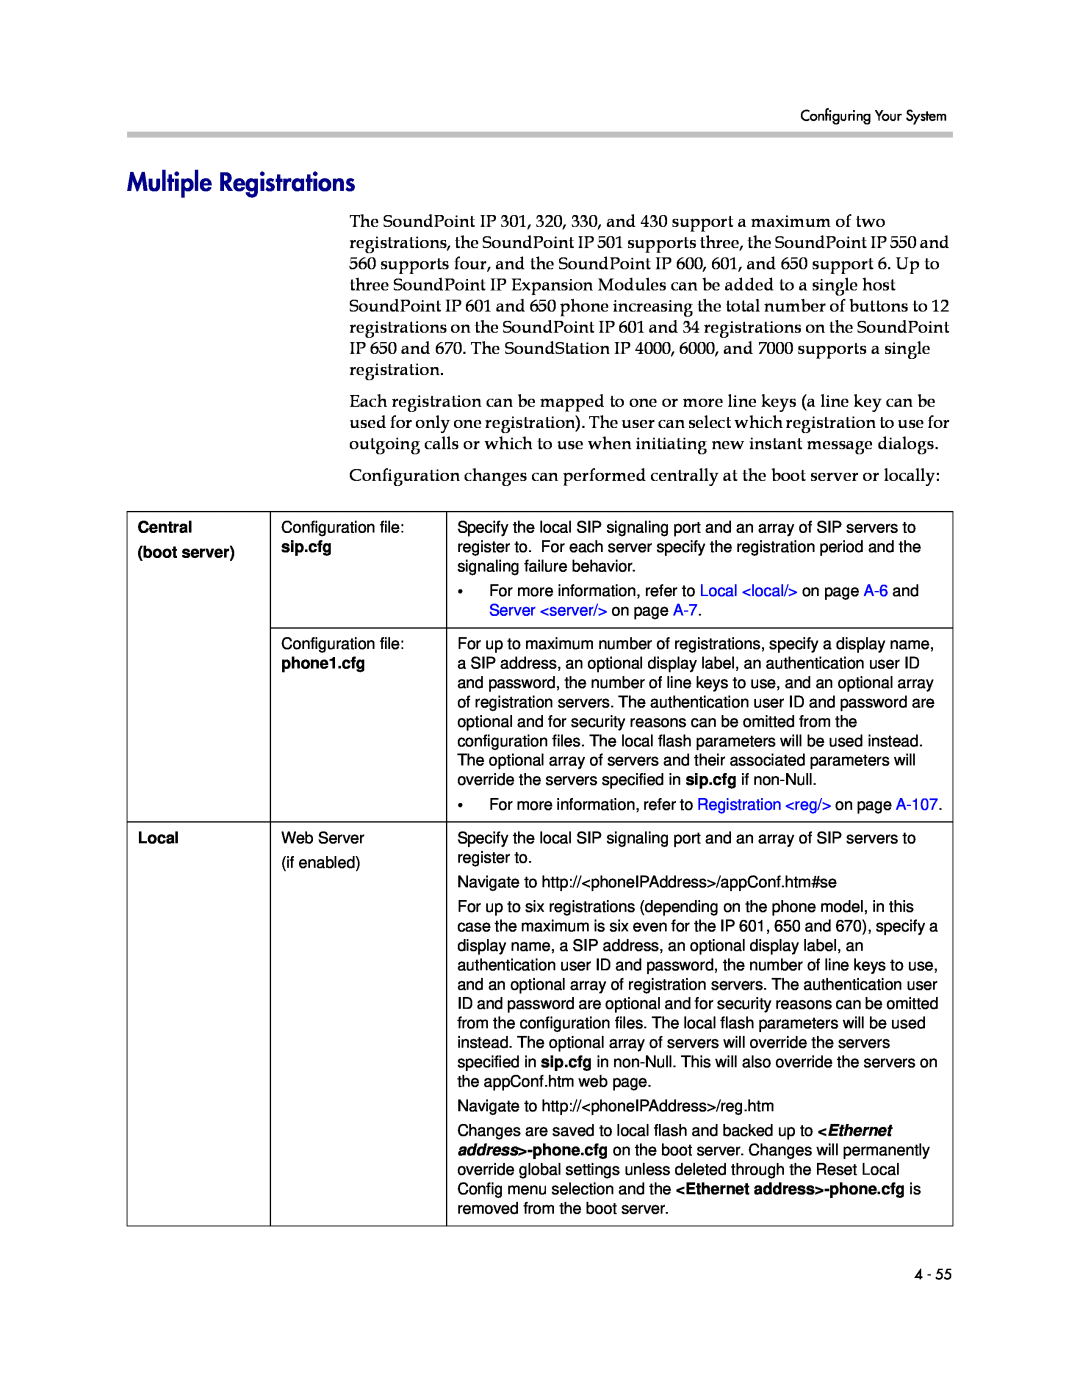 Polycom SIP 3.1 manual Multiple Registrations, Server server/ on page A-7 